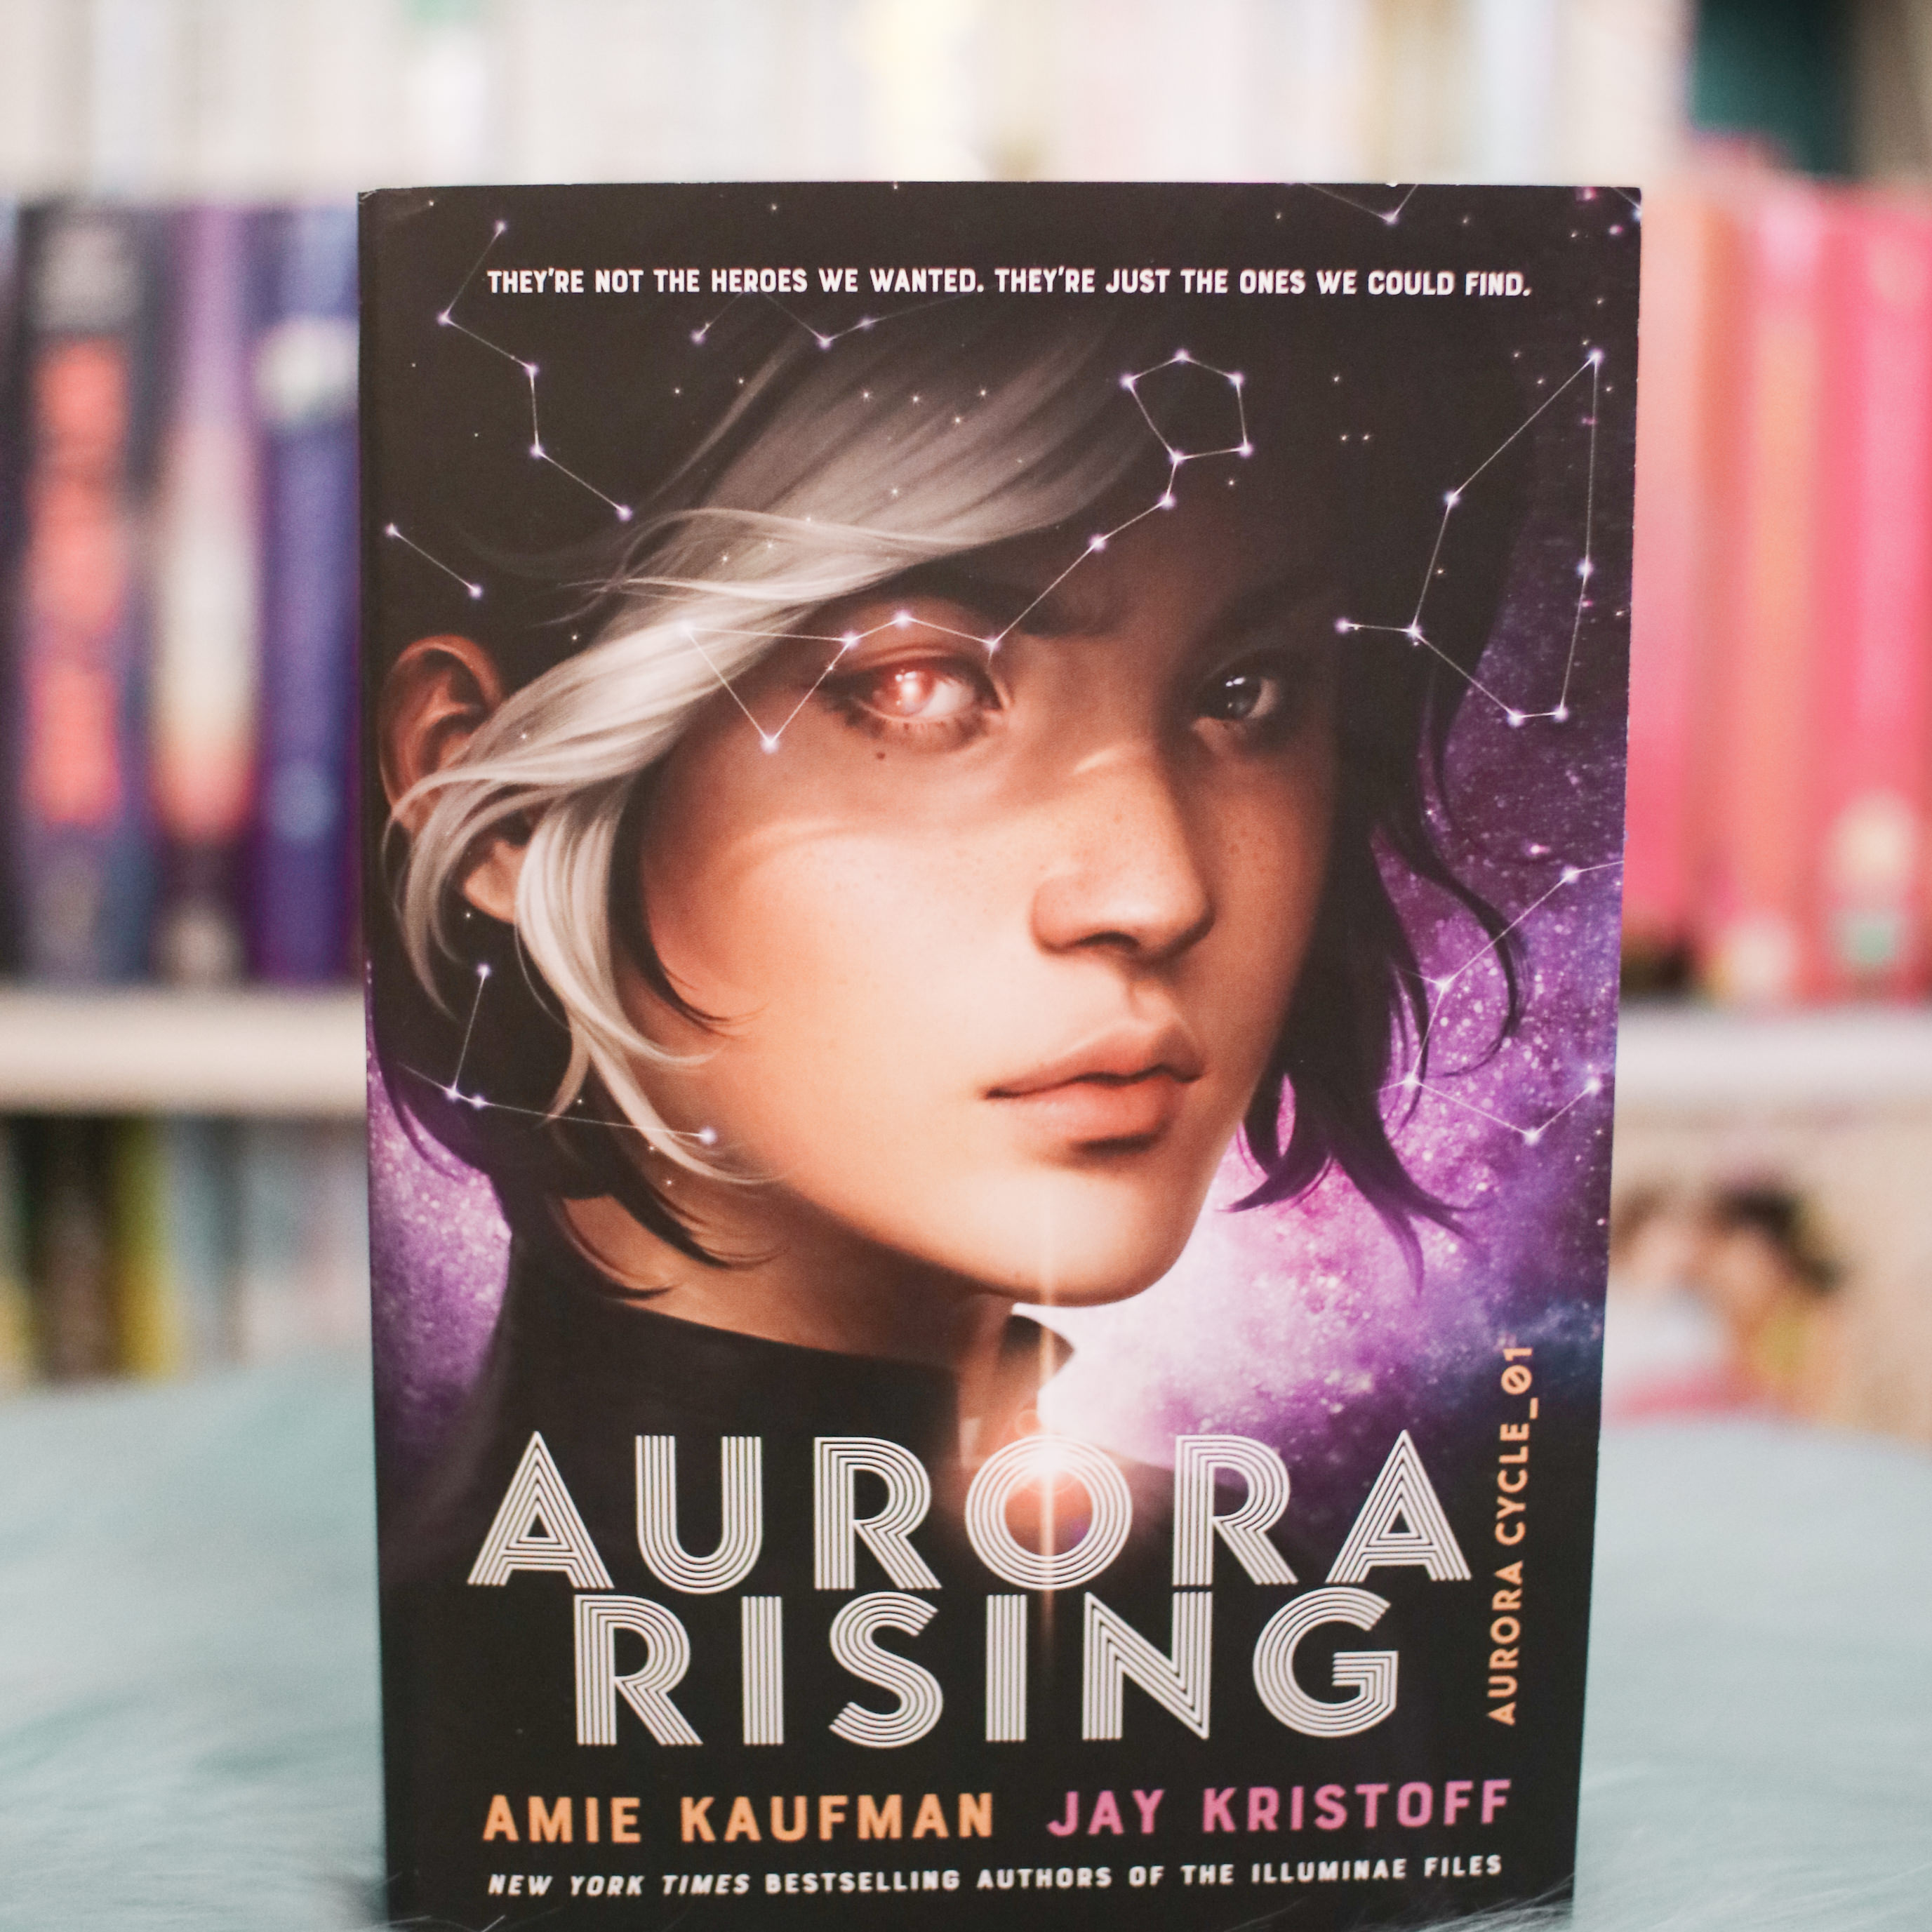 Aurora Rising by Amie Kaufman & Jay Kristoff